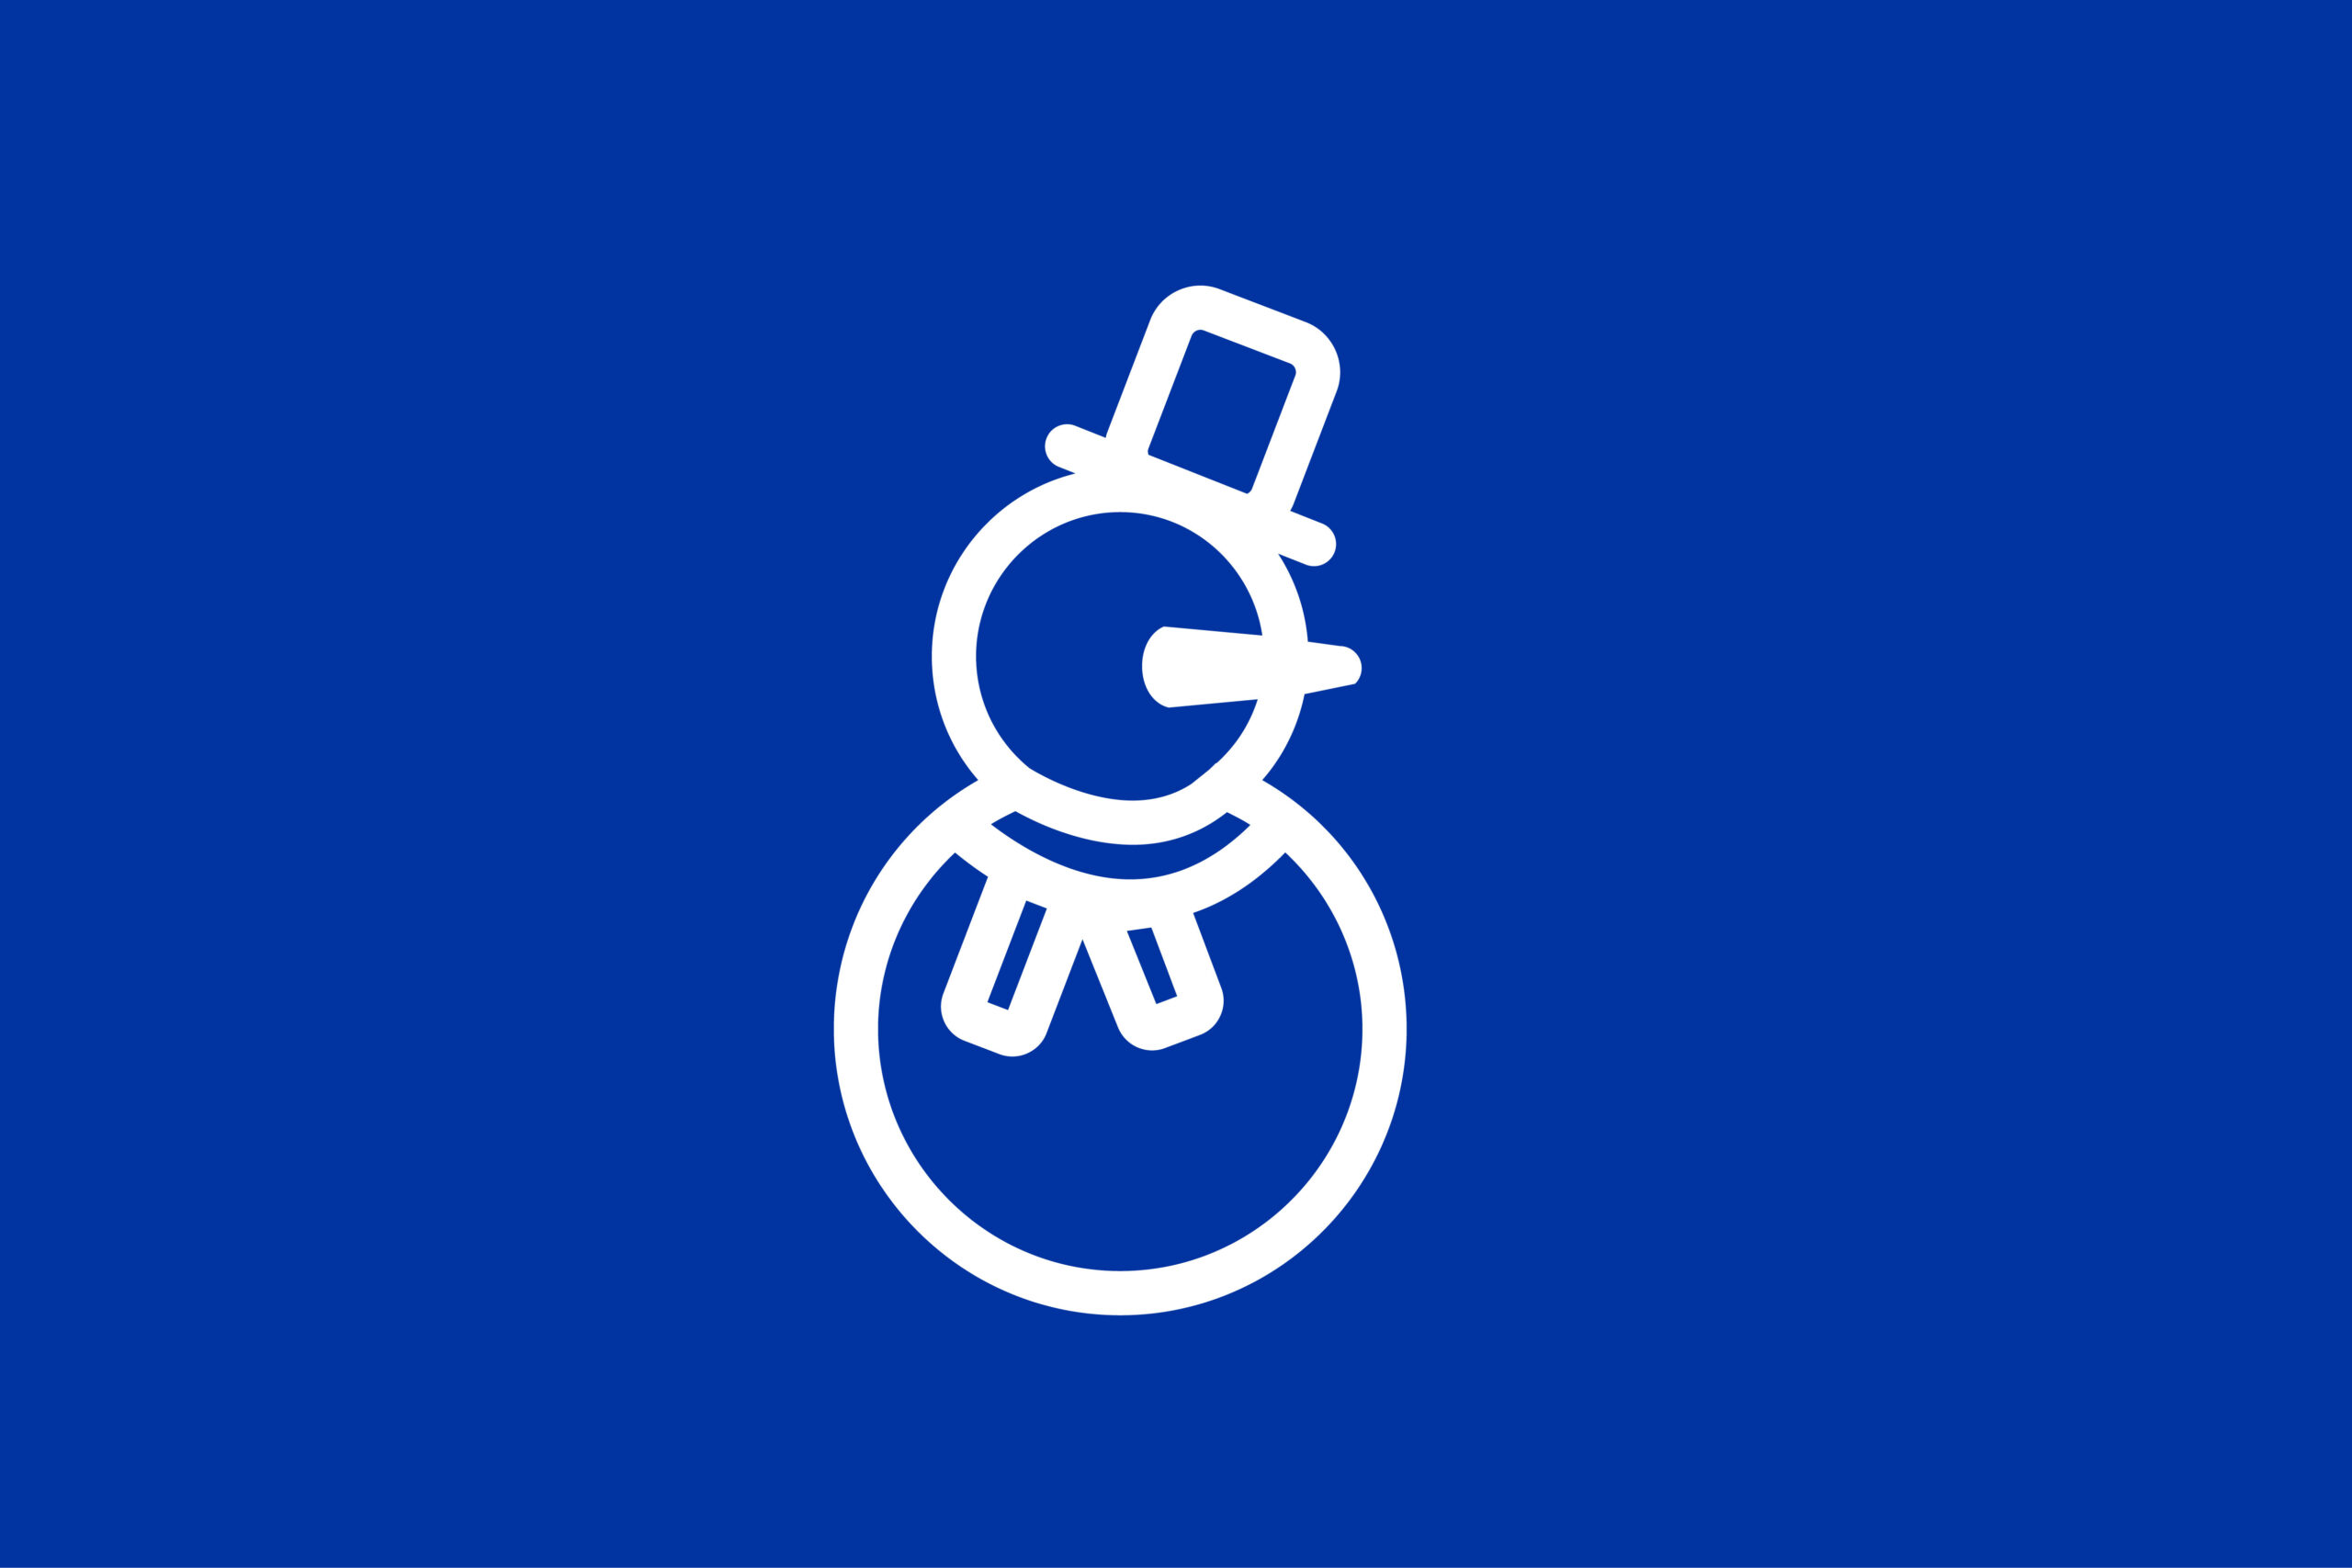 white snowman icon on a blue background